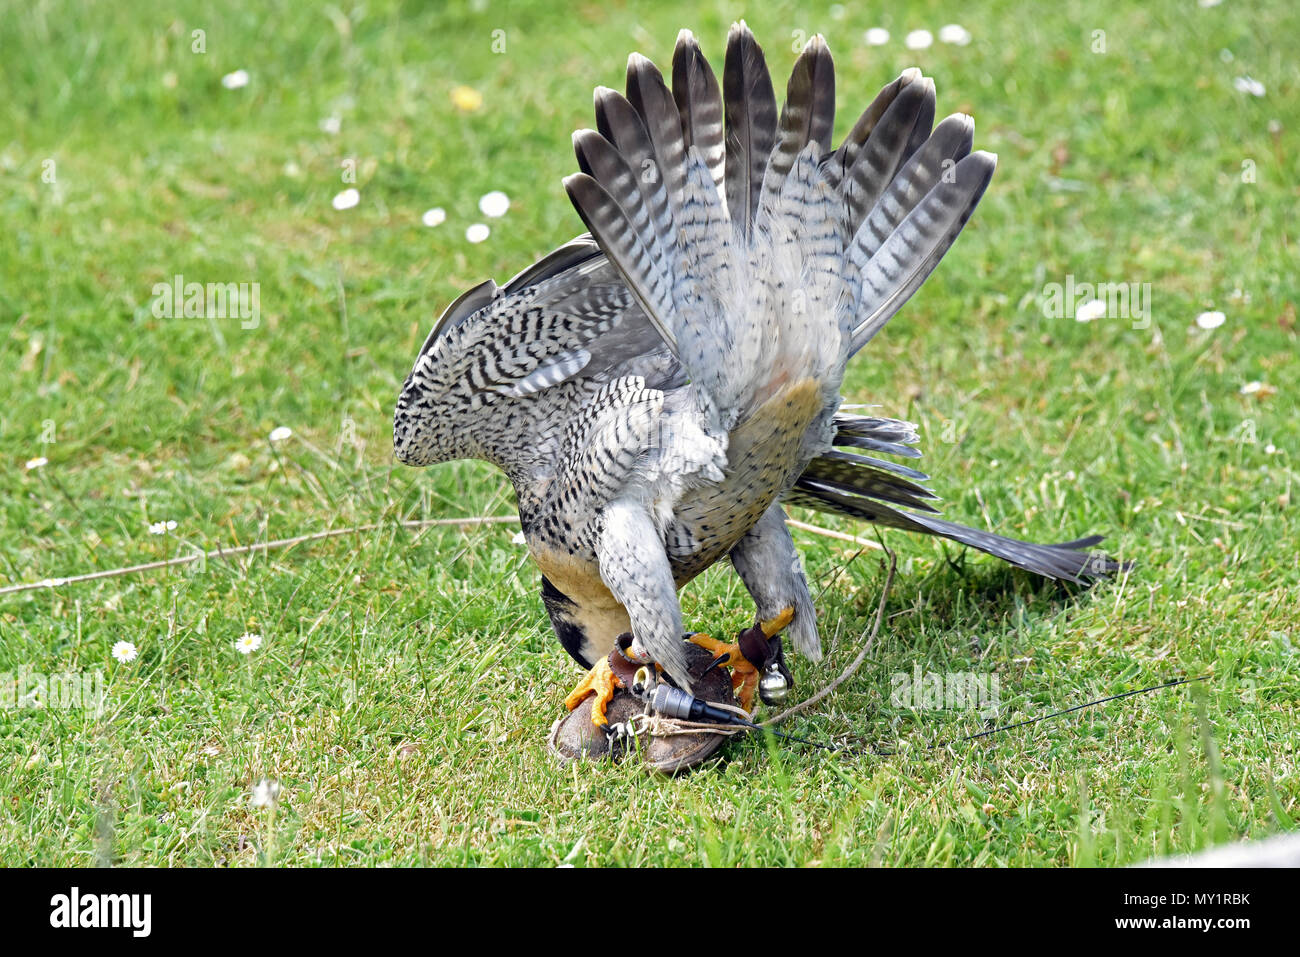 A male Peregrine Falcon (Falco peregrinus) devouring its lure in a